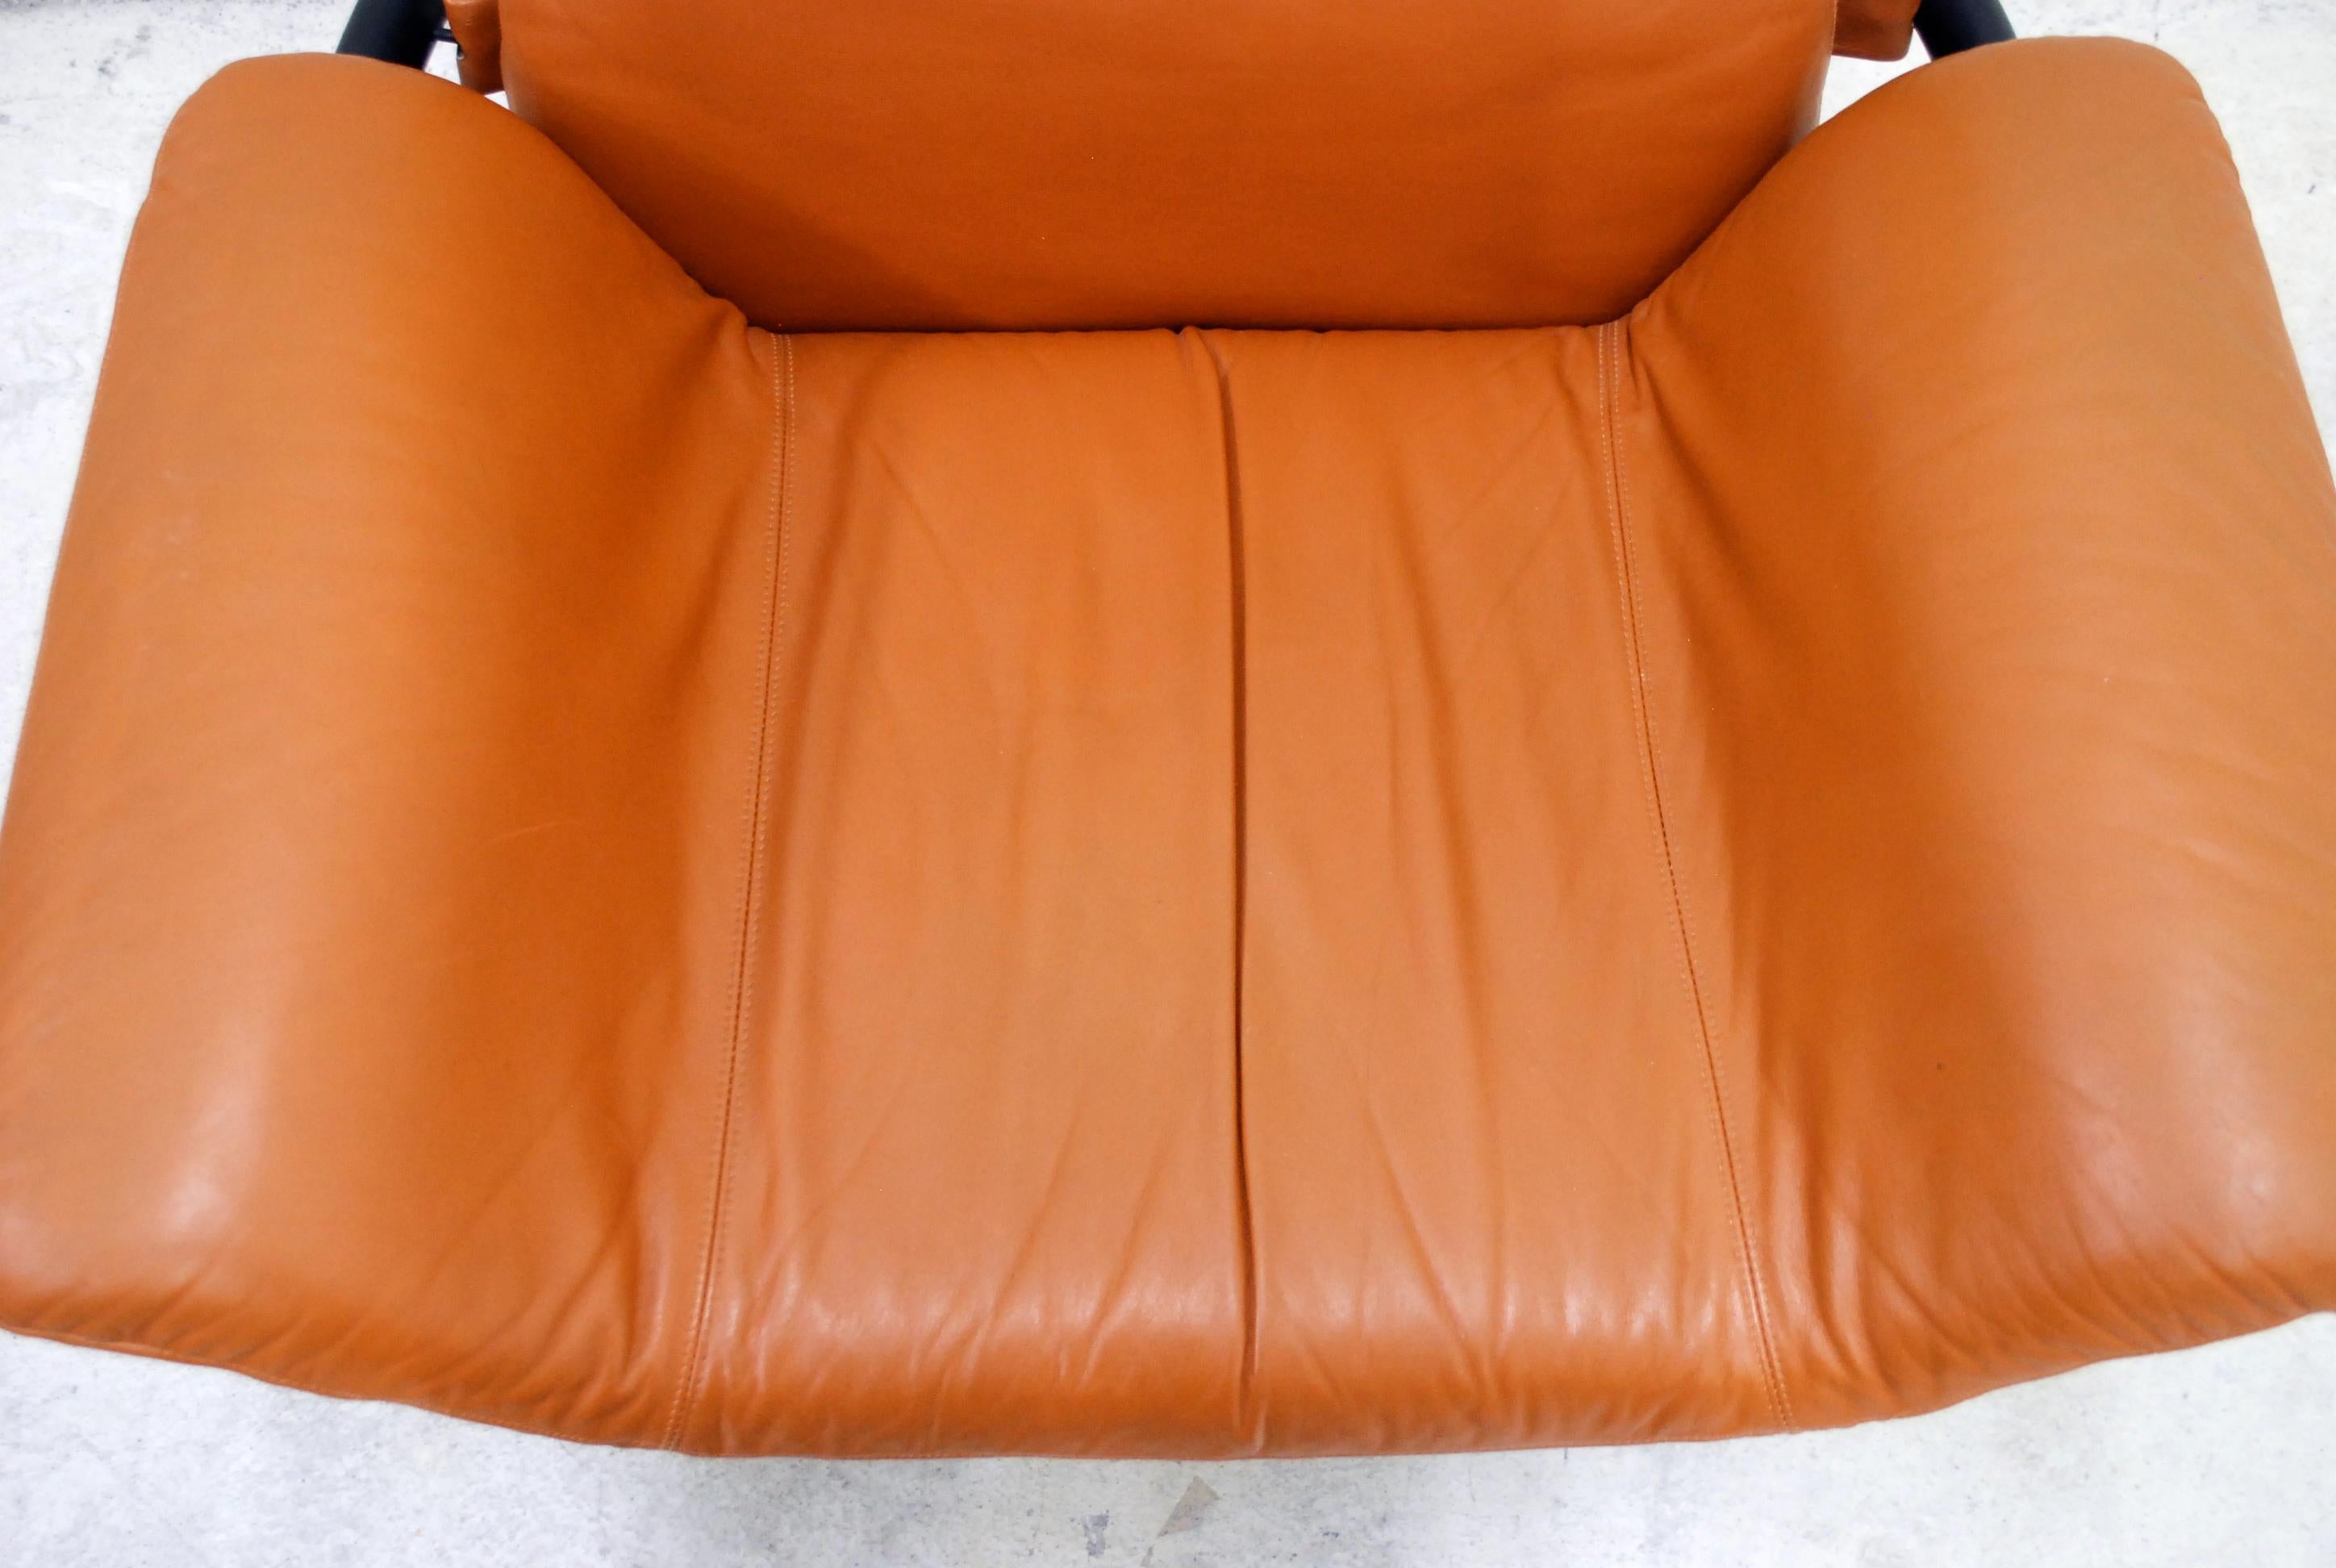 Westnofa Model Manta Cognac Leather Lounge Chair 1